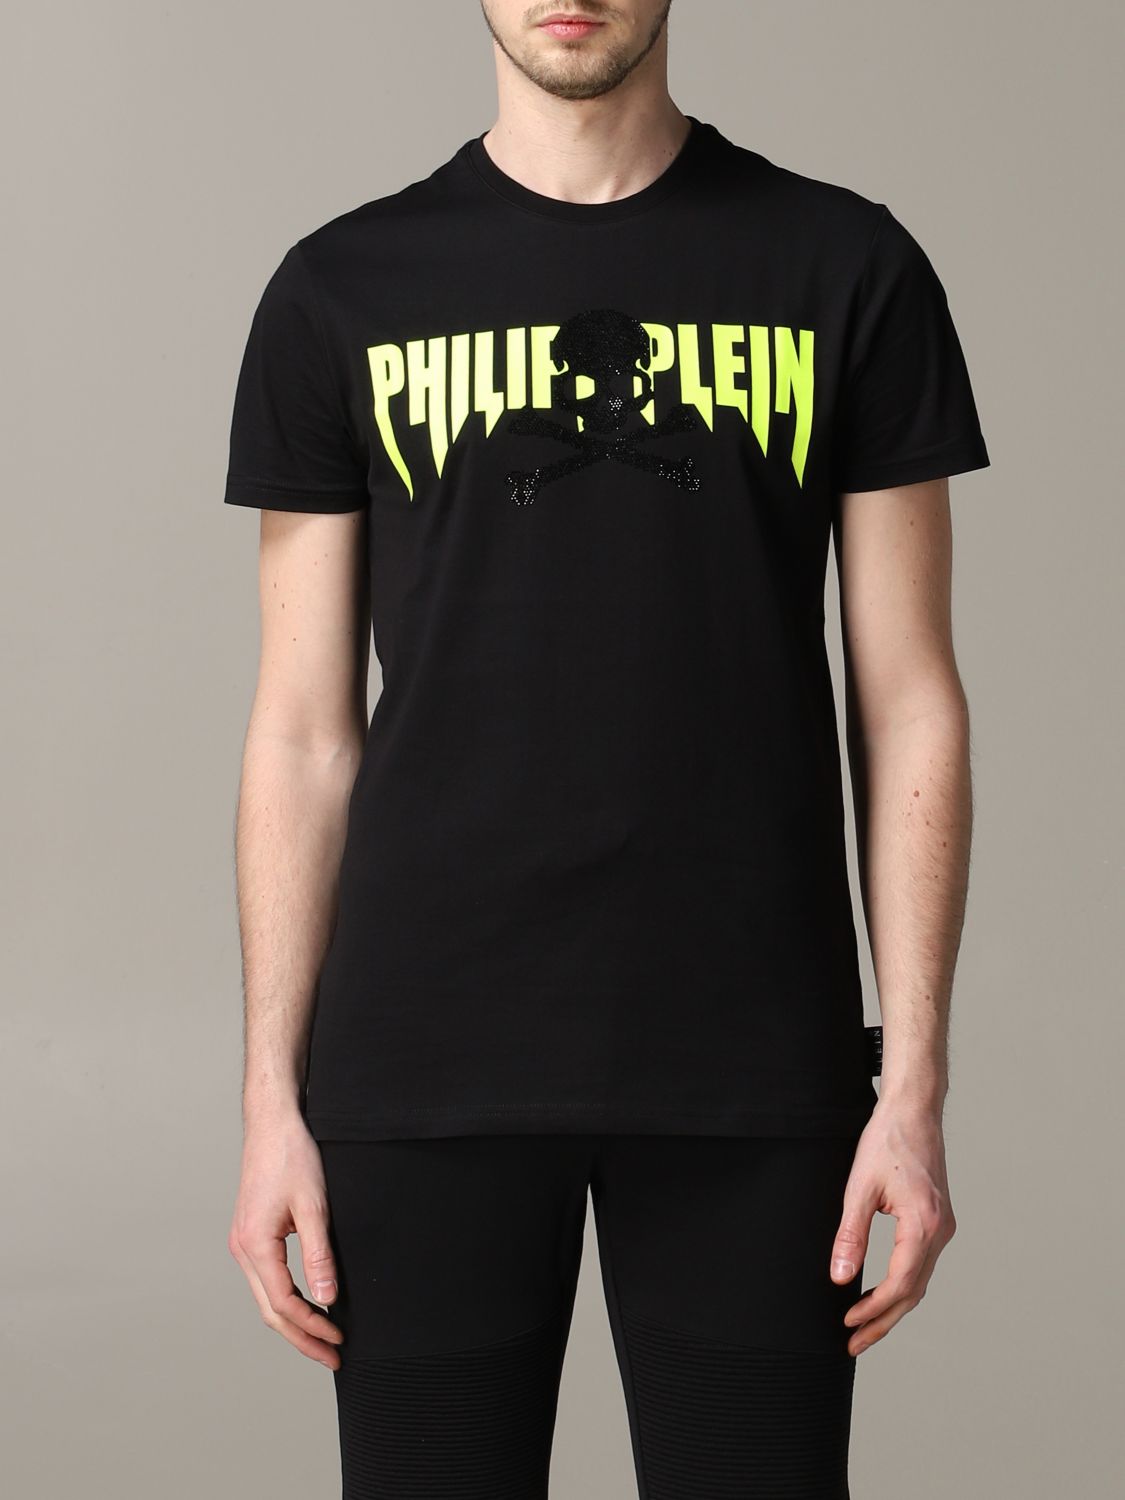 philipp plein t shirt black